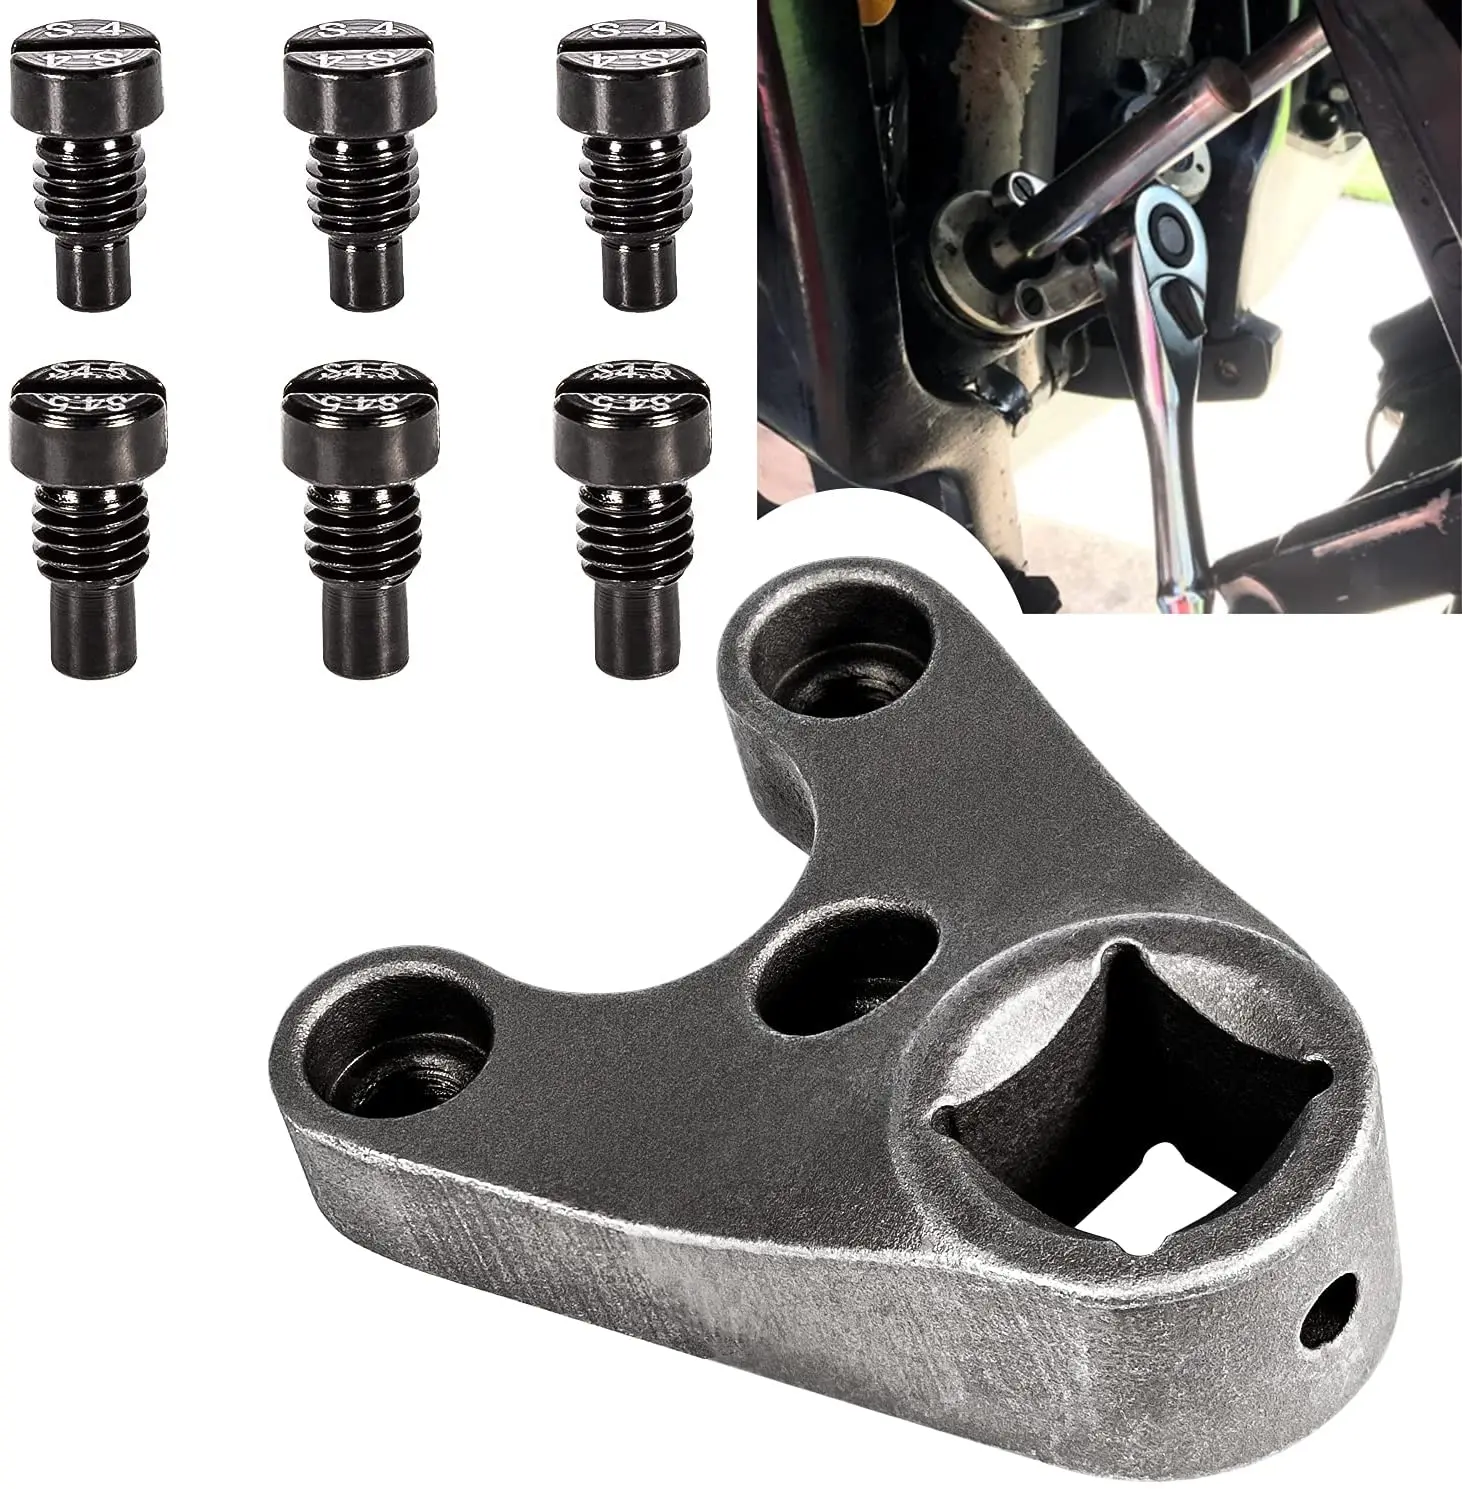 Trim/Tilt Pin Wrench AMT0006-32mm x 4.5/4mm Remove Trim/Tilt Caps on Hydraulic Cylinders for Yamaha, Suzuki, Johnson, Evinrude,